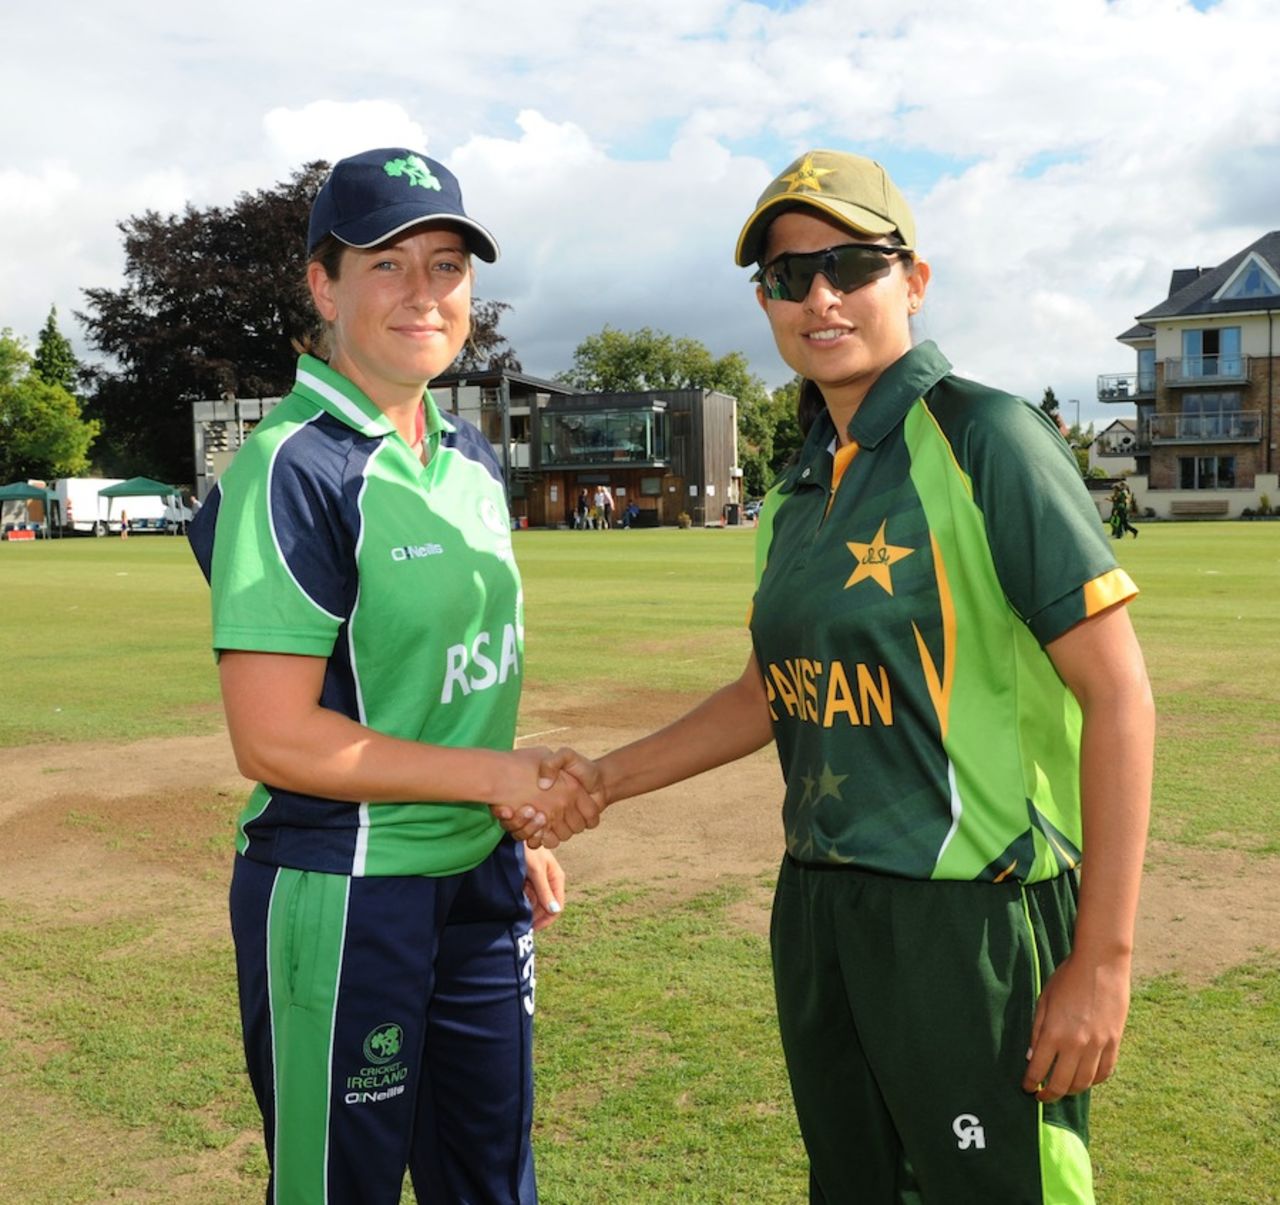 Captains Isobel Joyce and Sana Mir before the match, Ireland Women v Pakistan Women, ICC Women's World Twenty20 Qualifiers, 1st semi-final, Dublin, July 29, 2013